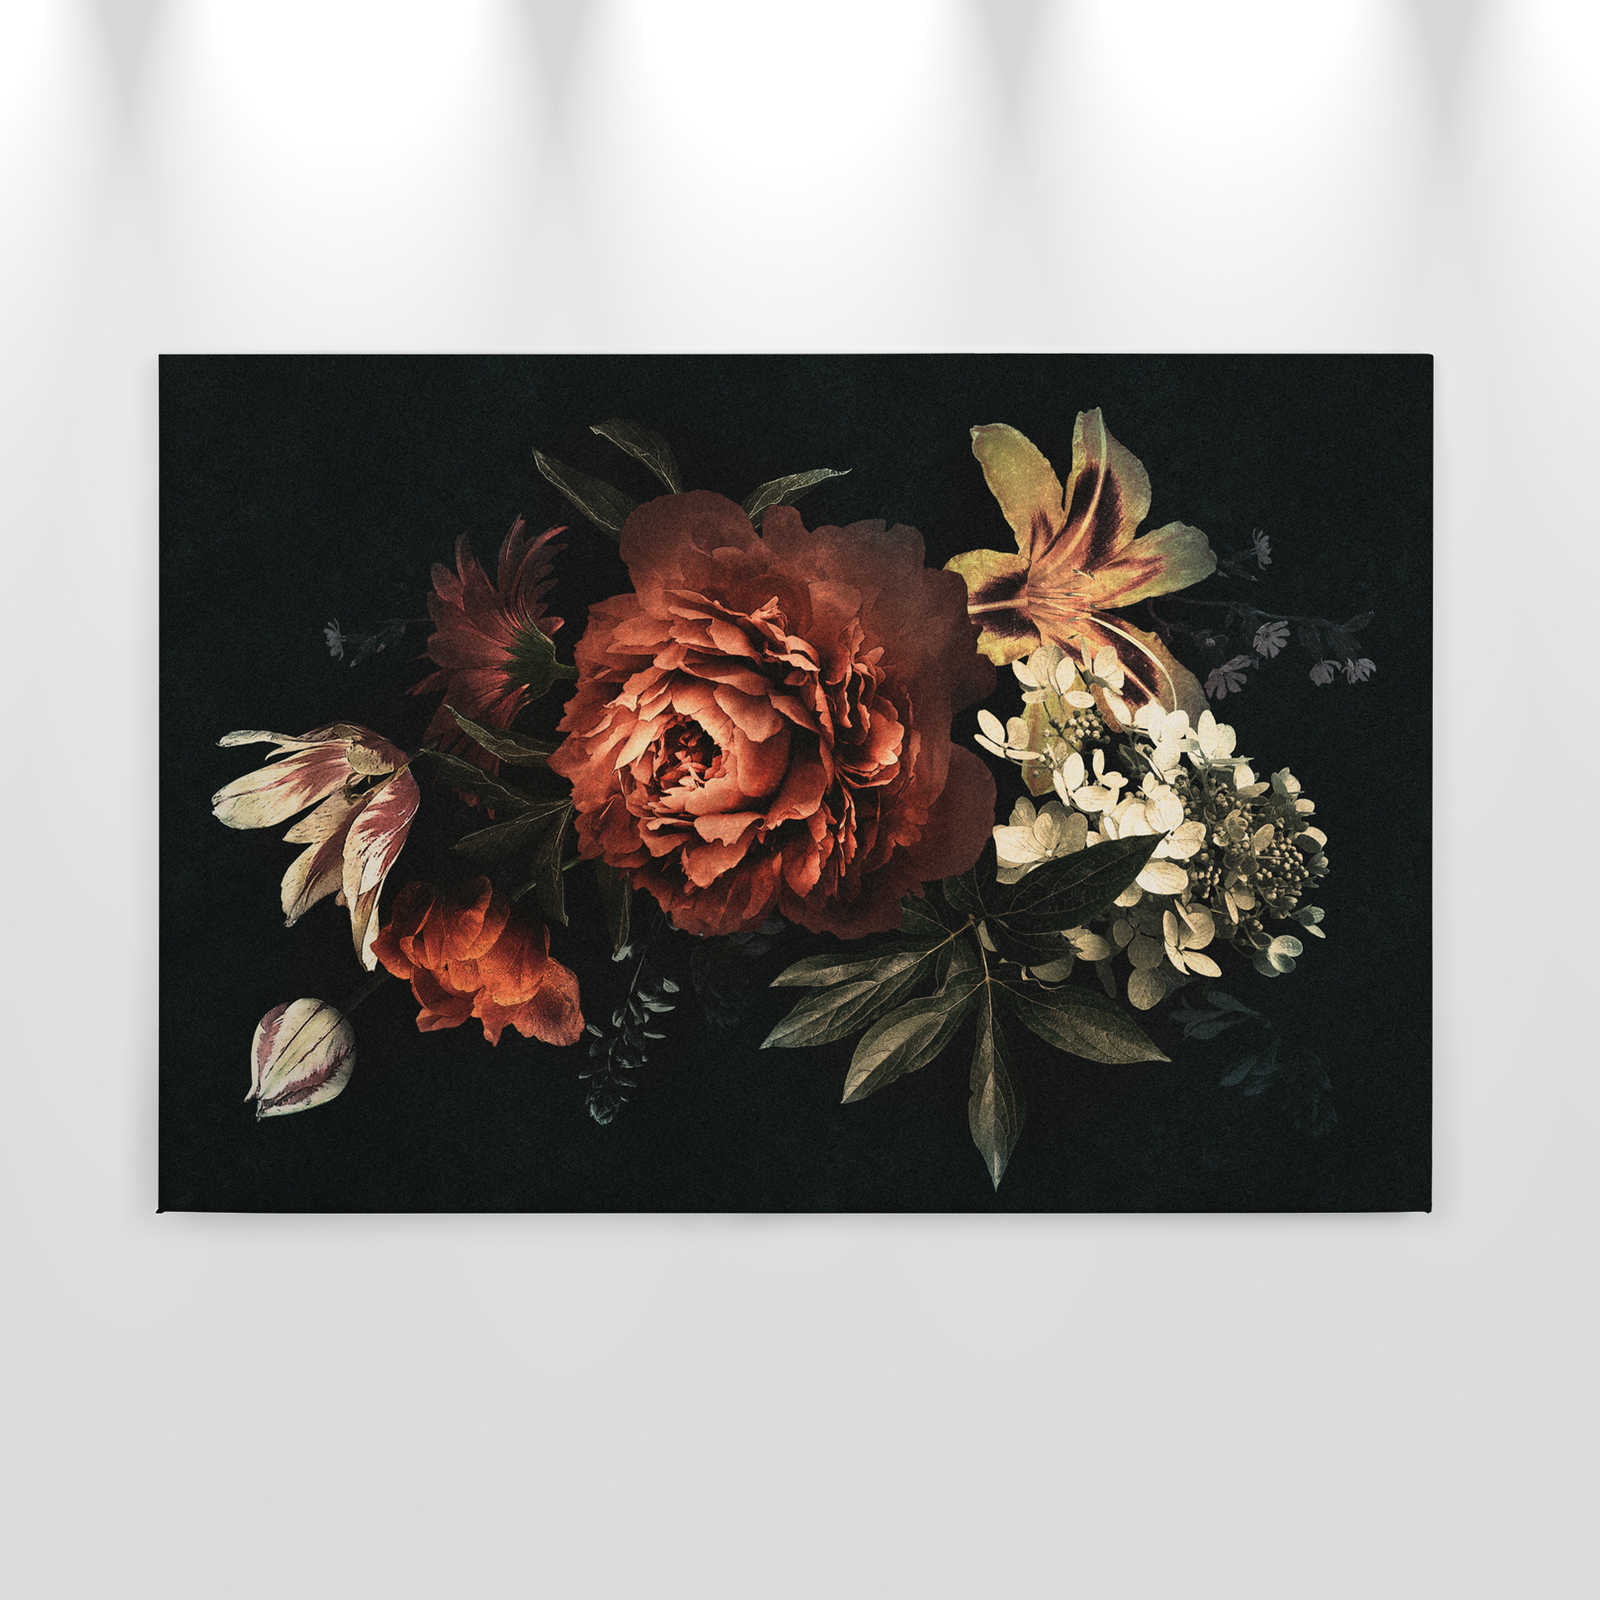             Drama queen 1 - Bouquet canvas picture with dark background in cardboard structure - 0.90 m x 0.60 m
        